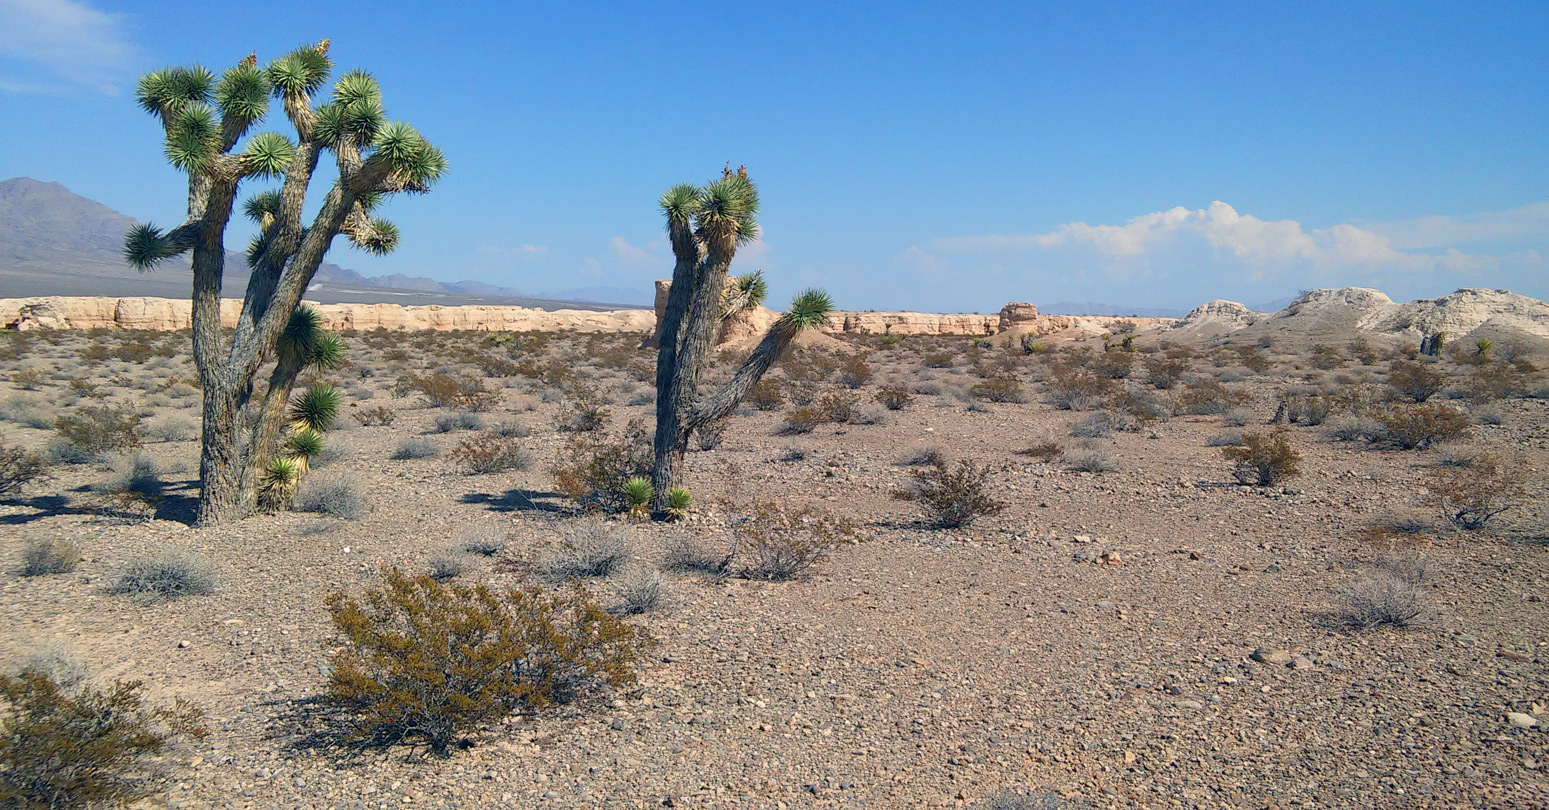 Mojave yucca on a desert plain